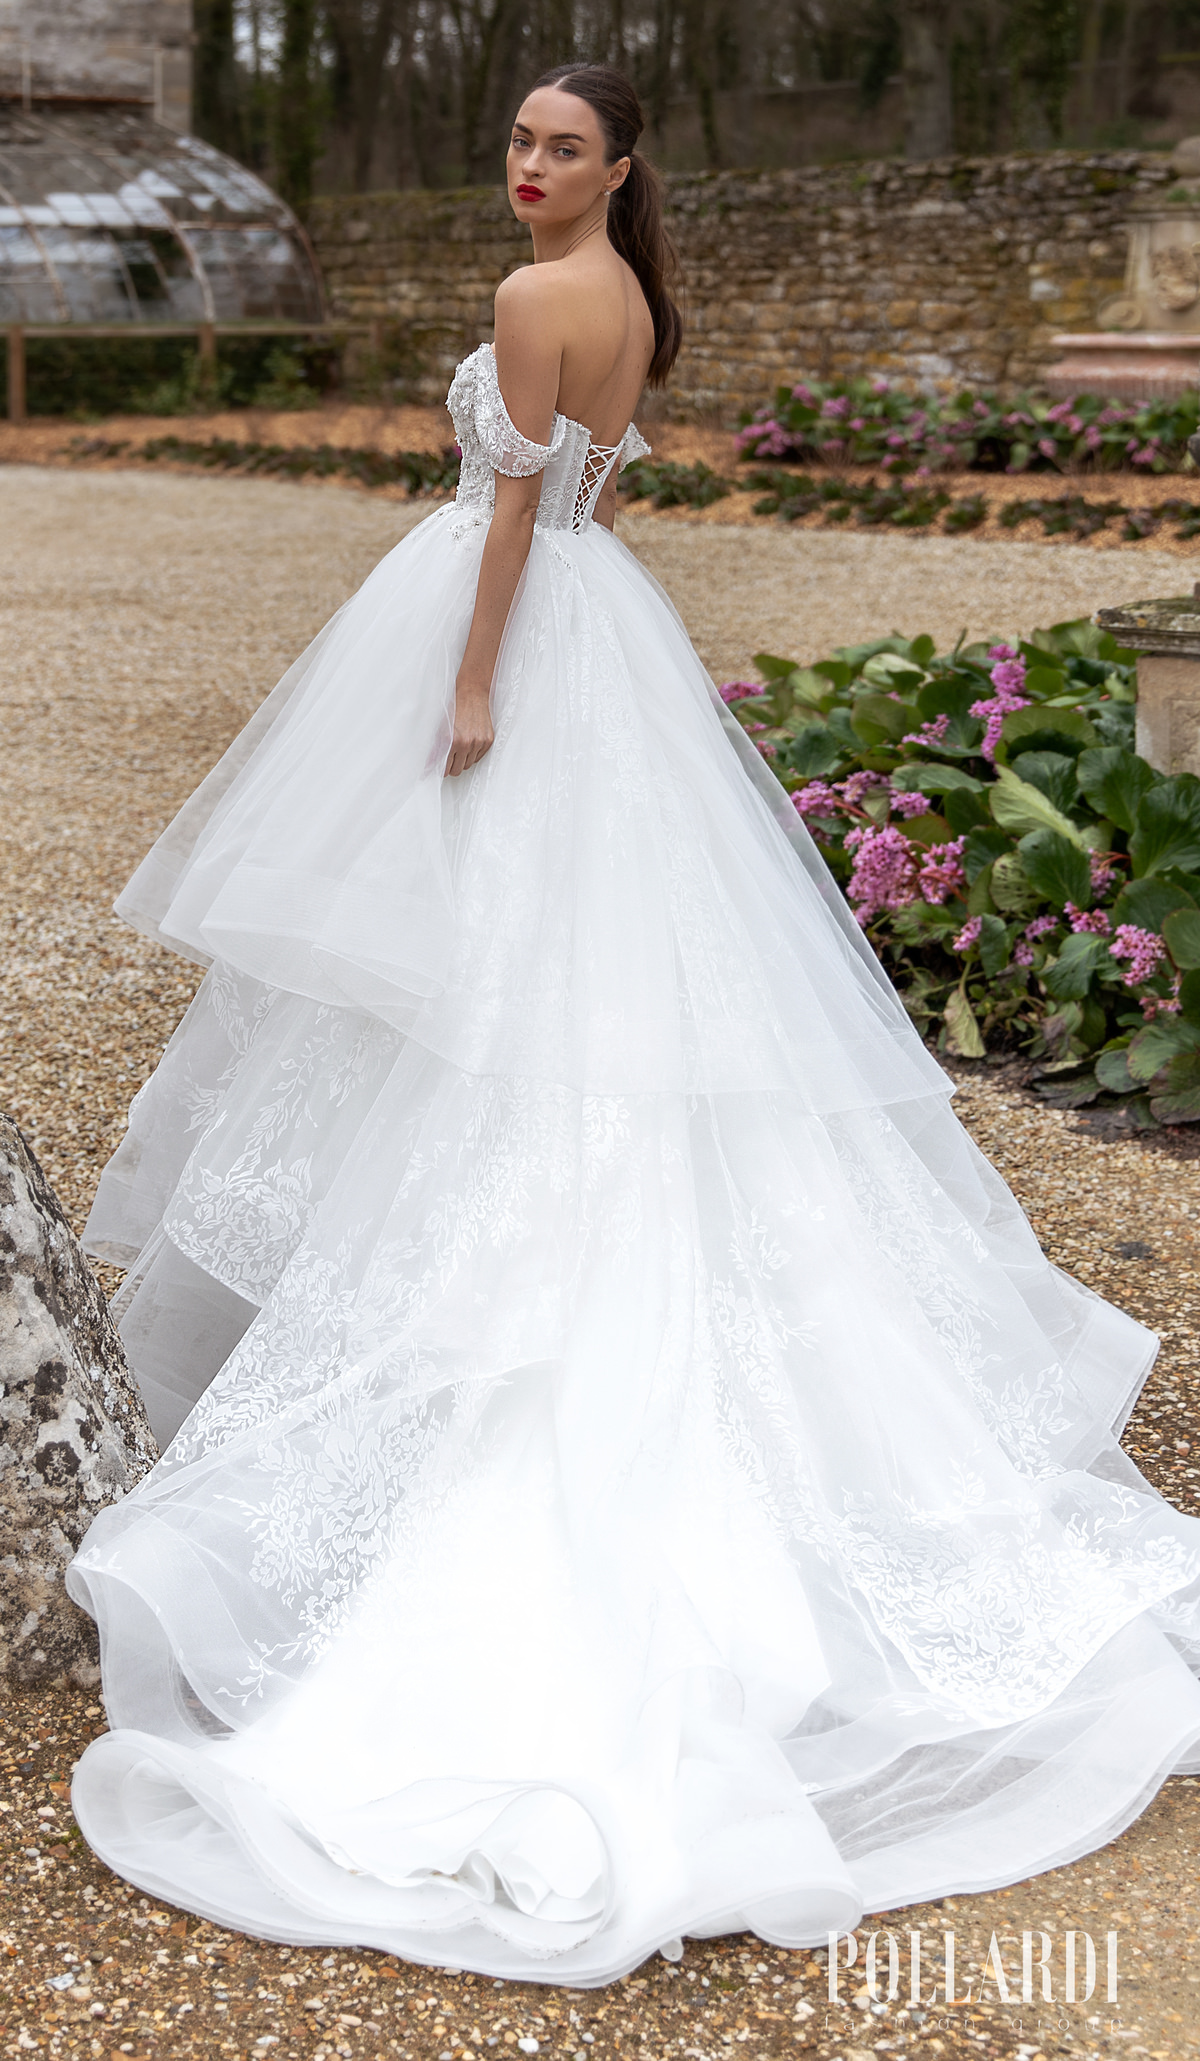 Pollardi Wedding Dresses 2021 Royalty Collection - Belle The Magazine